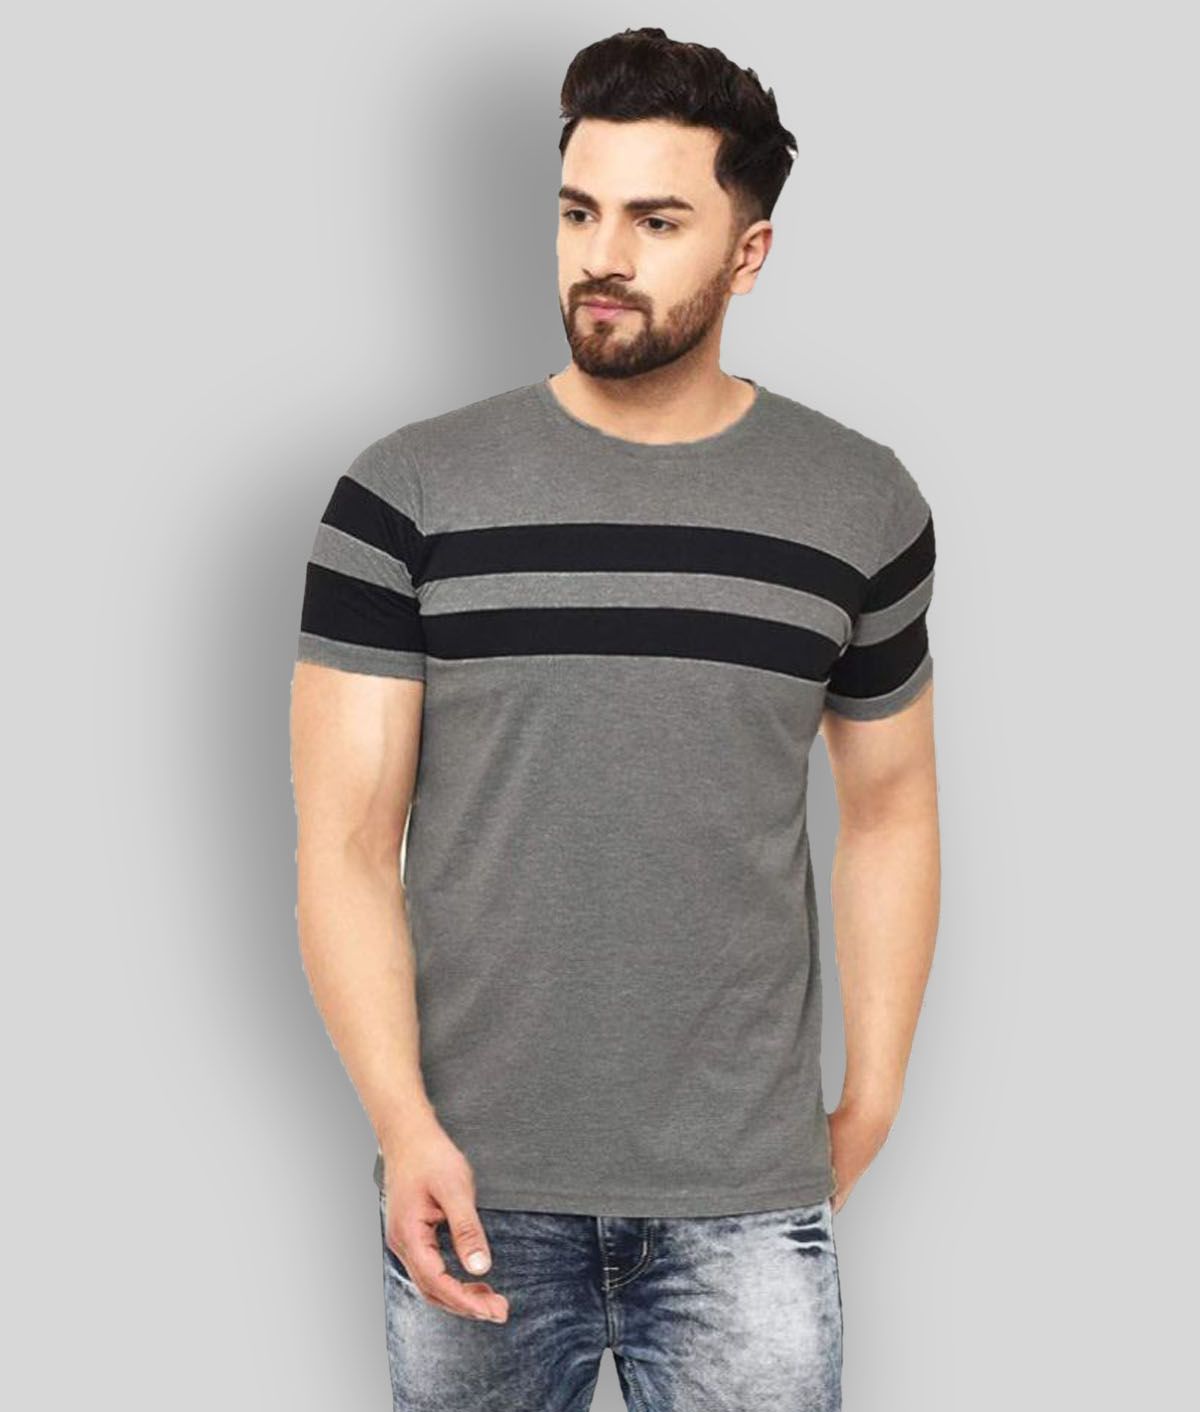     			Leotude - Silver Cotton Blend Regular Fit  Men's T-Shirt ( Pack of 1 )